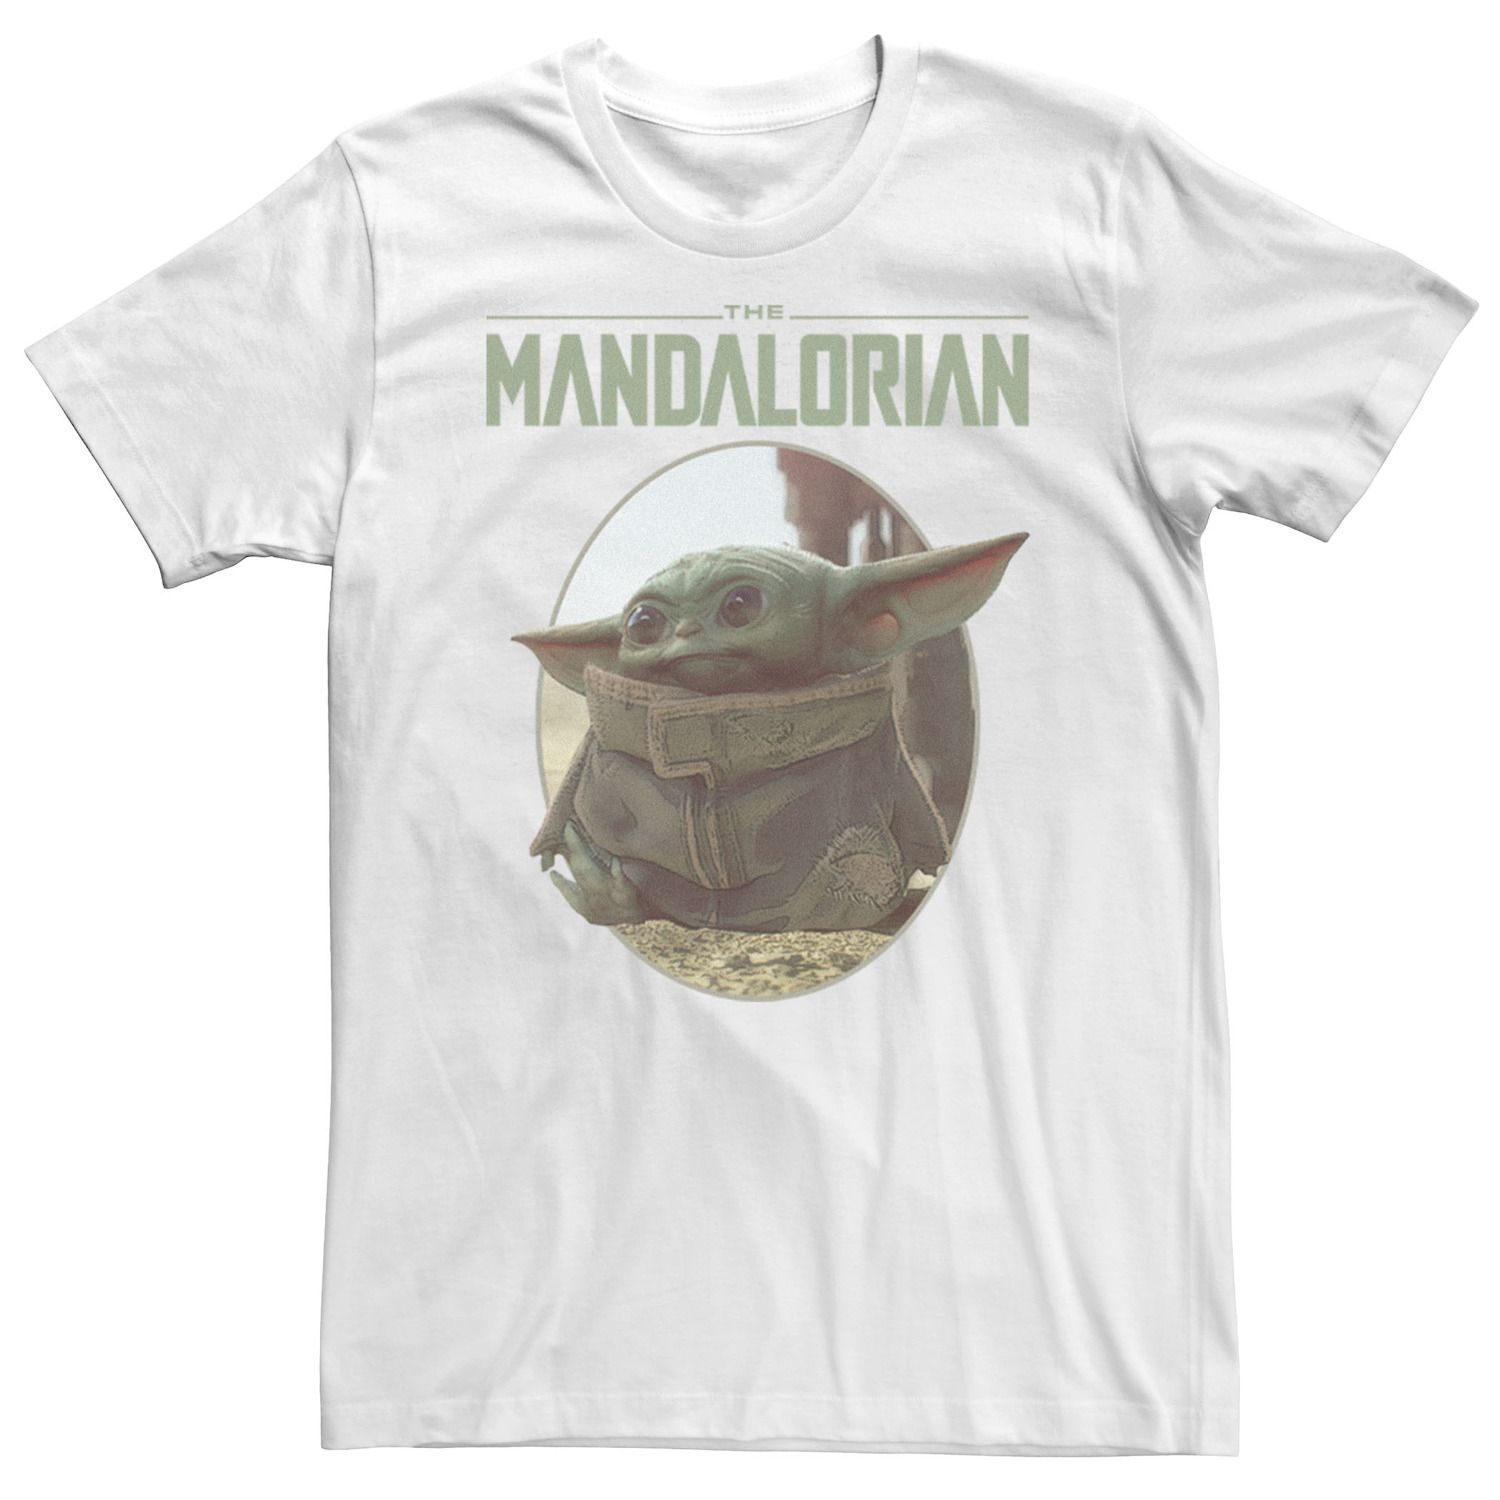 Мужская футболка с портретом The Mandalorian The Child Circle Star Wars, белый